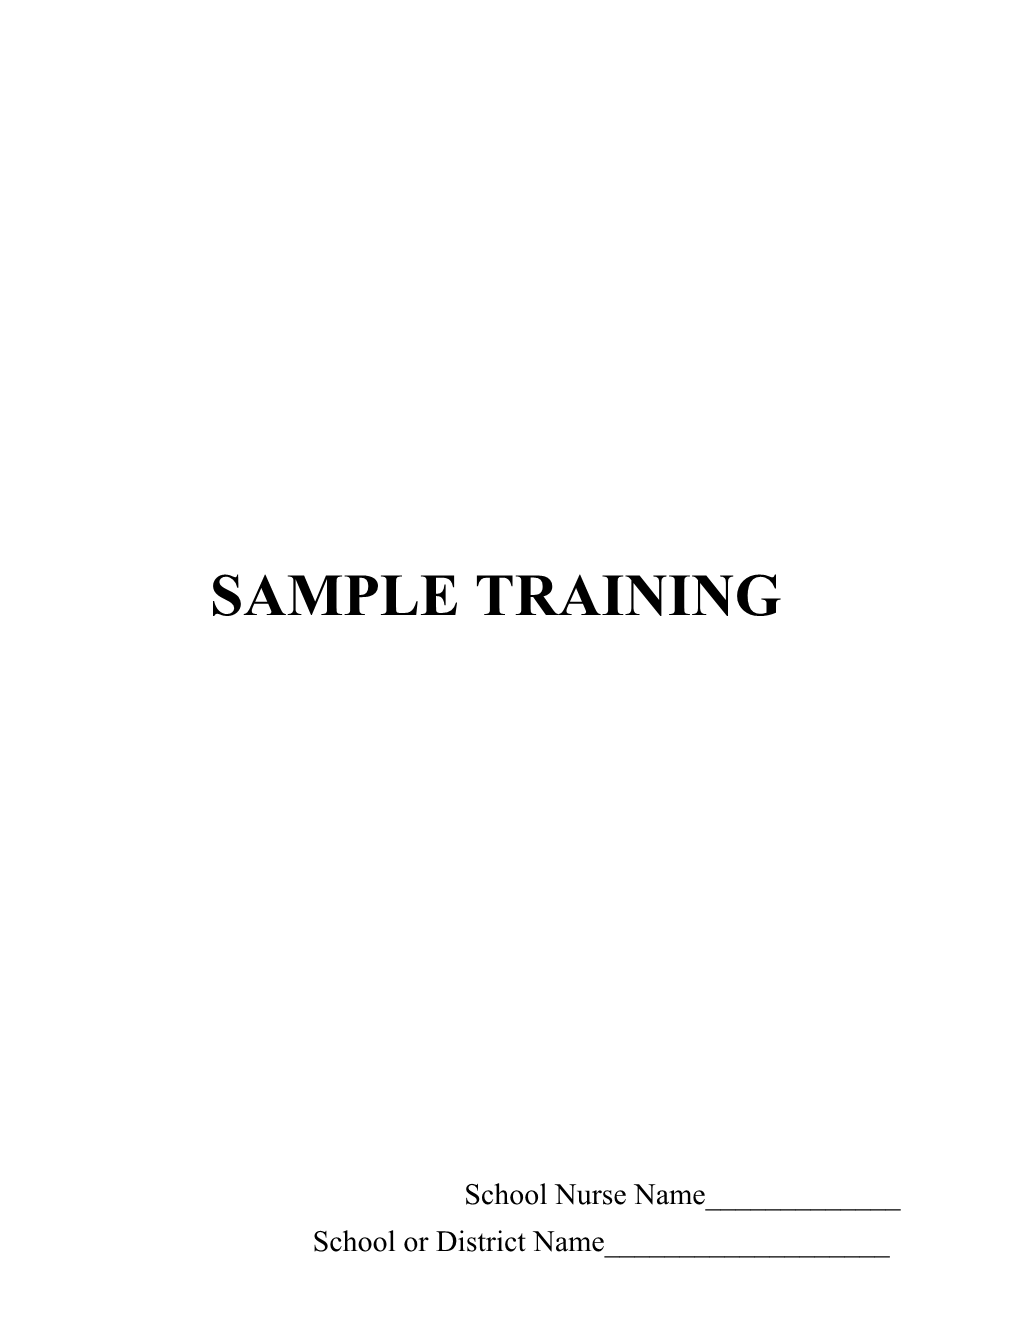 Sample Training